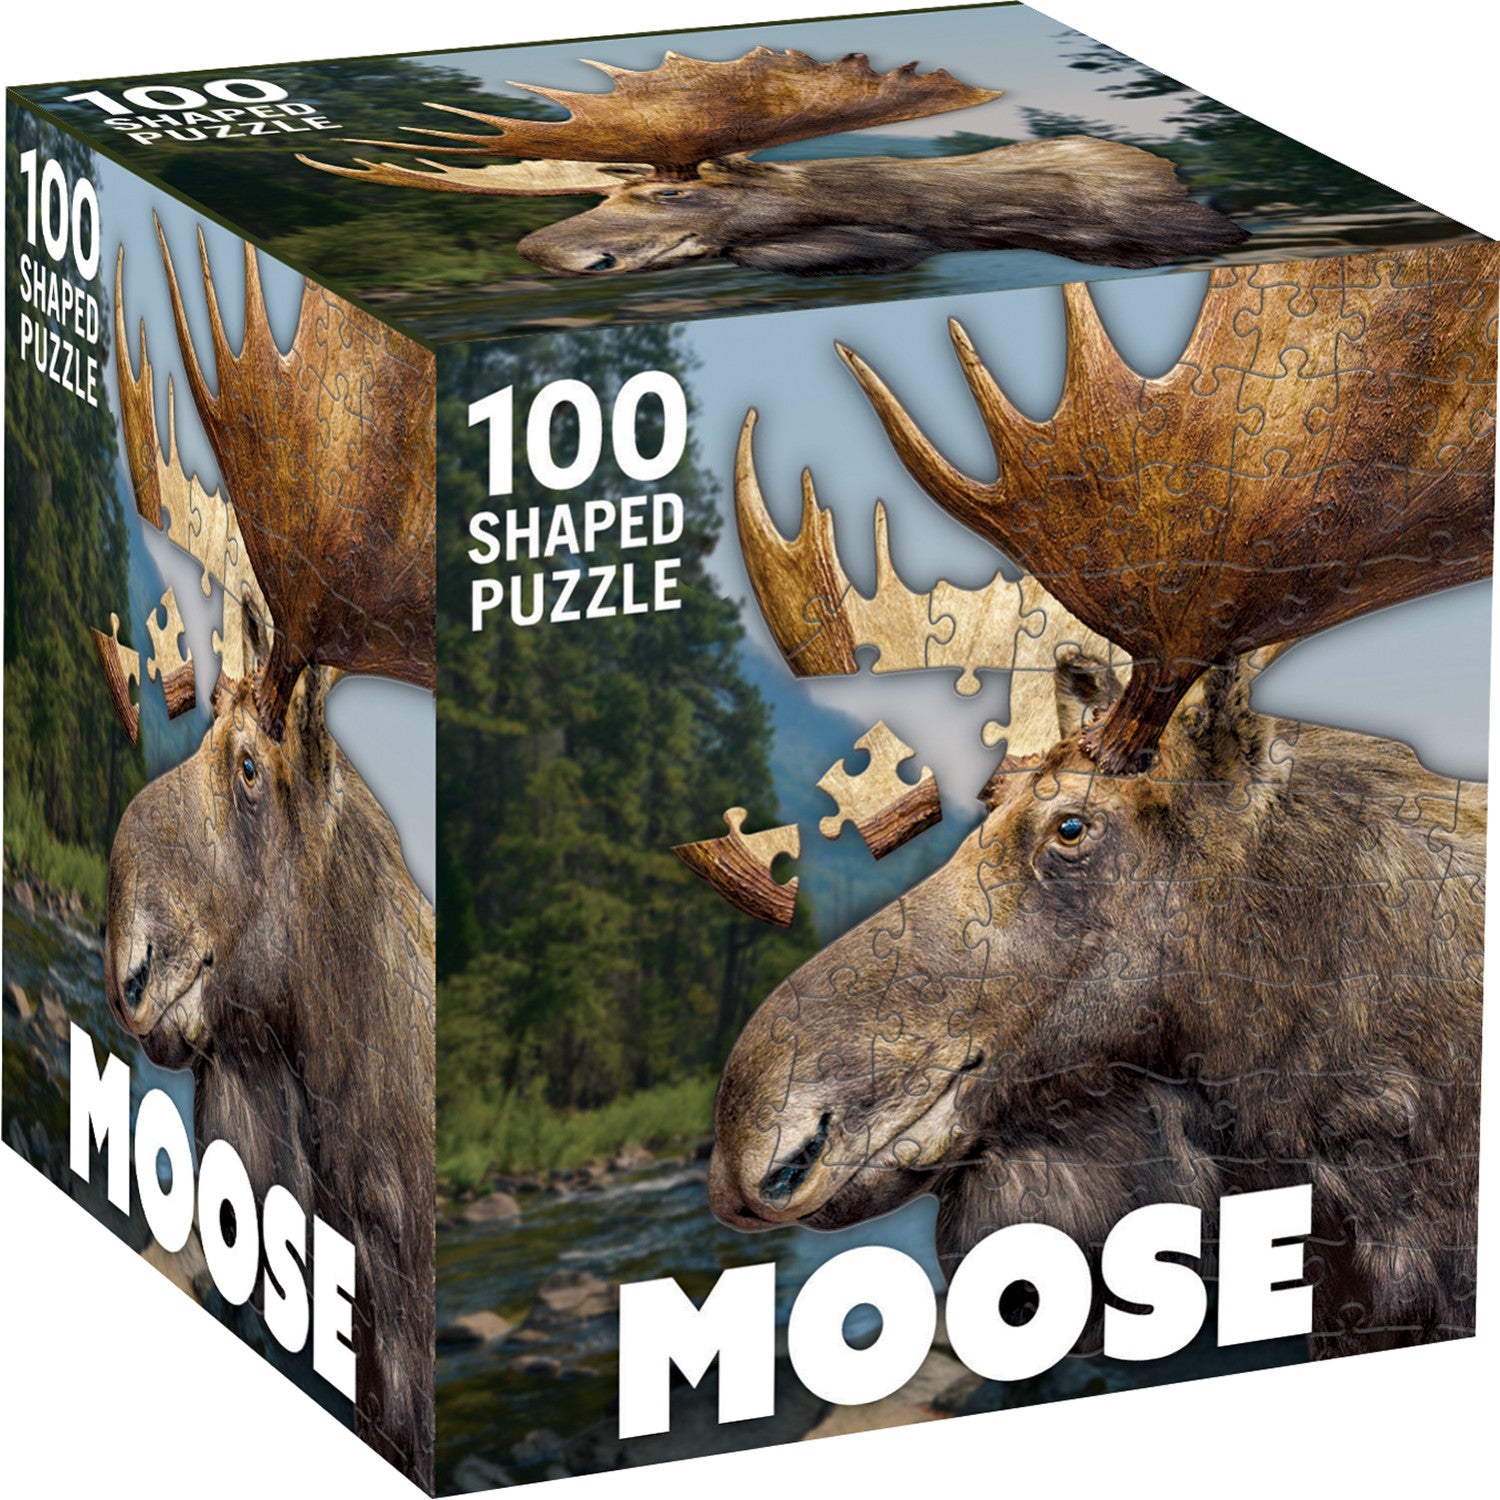 Moose 100 Piece Shaped Jigsaw Puzzle